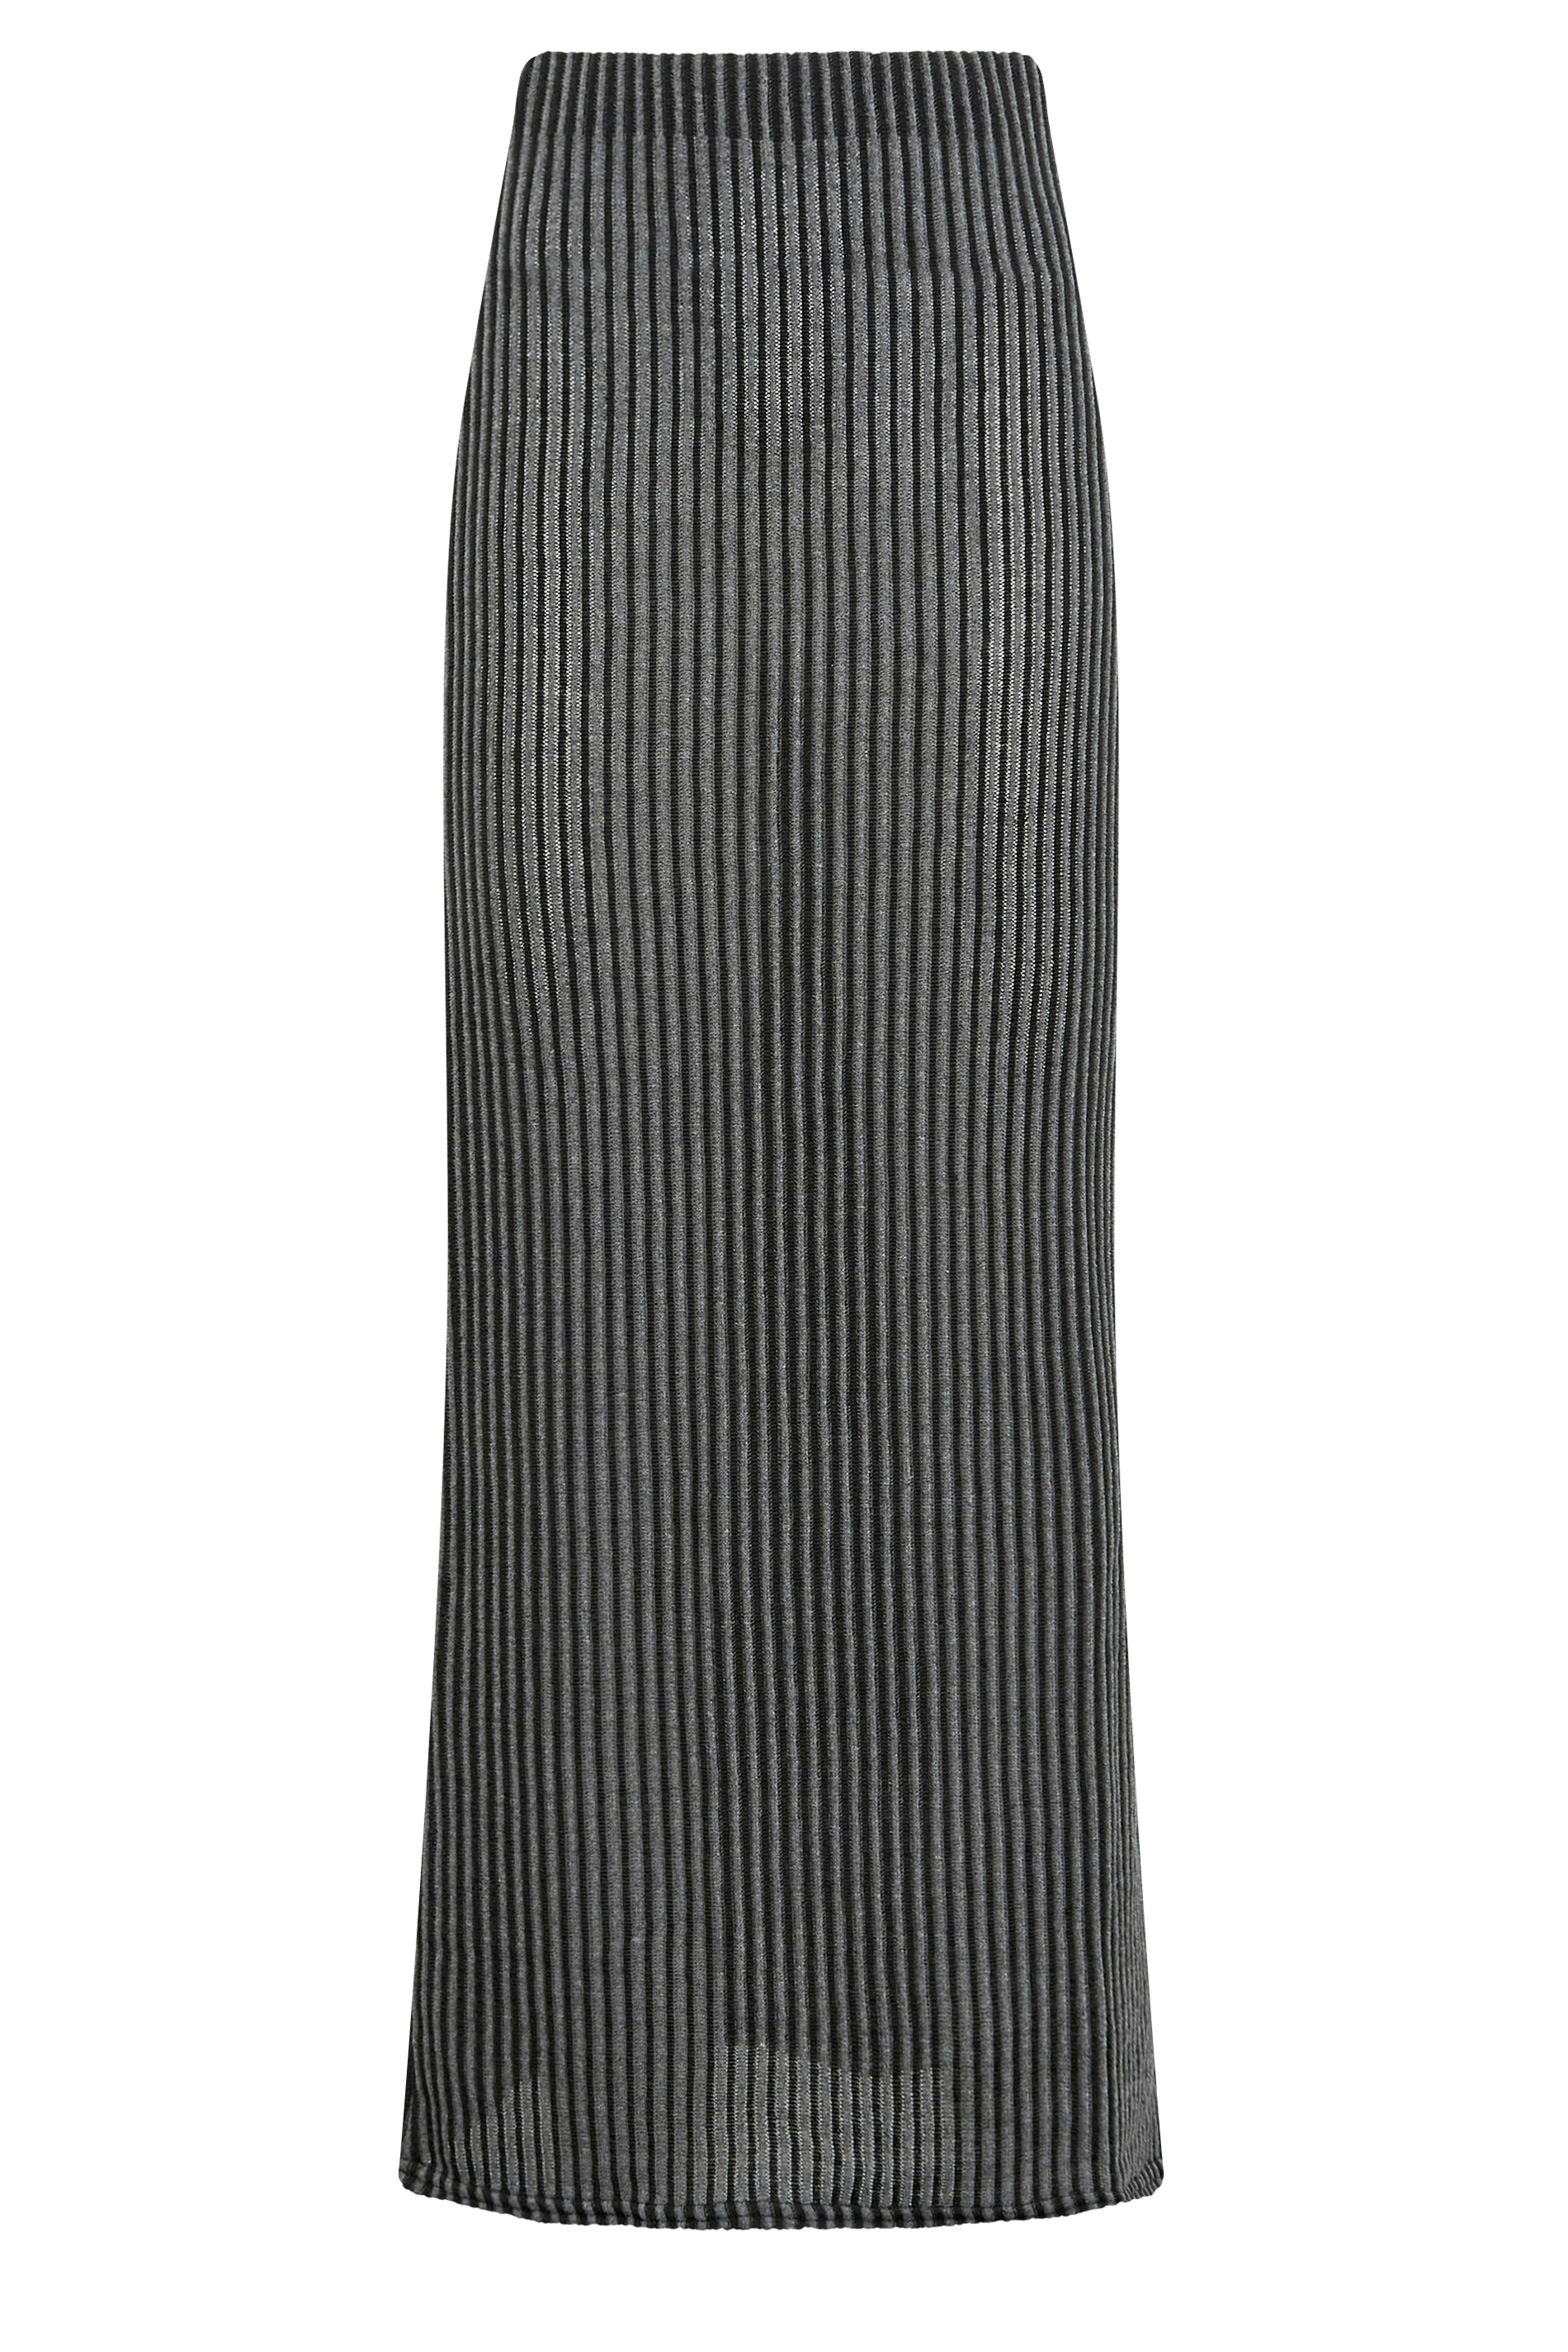 LTS Tall Black Ribbed Maxi Skirt | Long Tall Sally